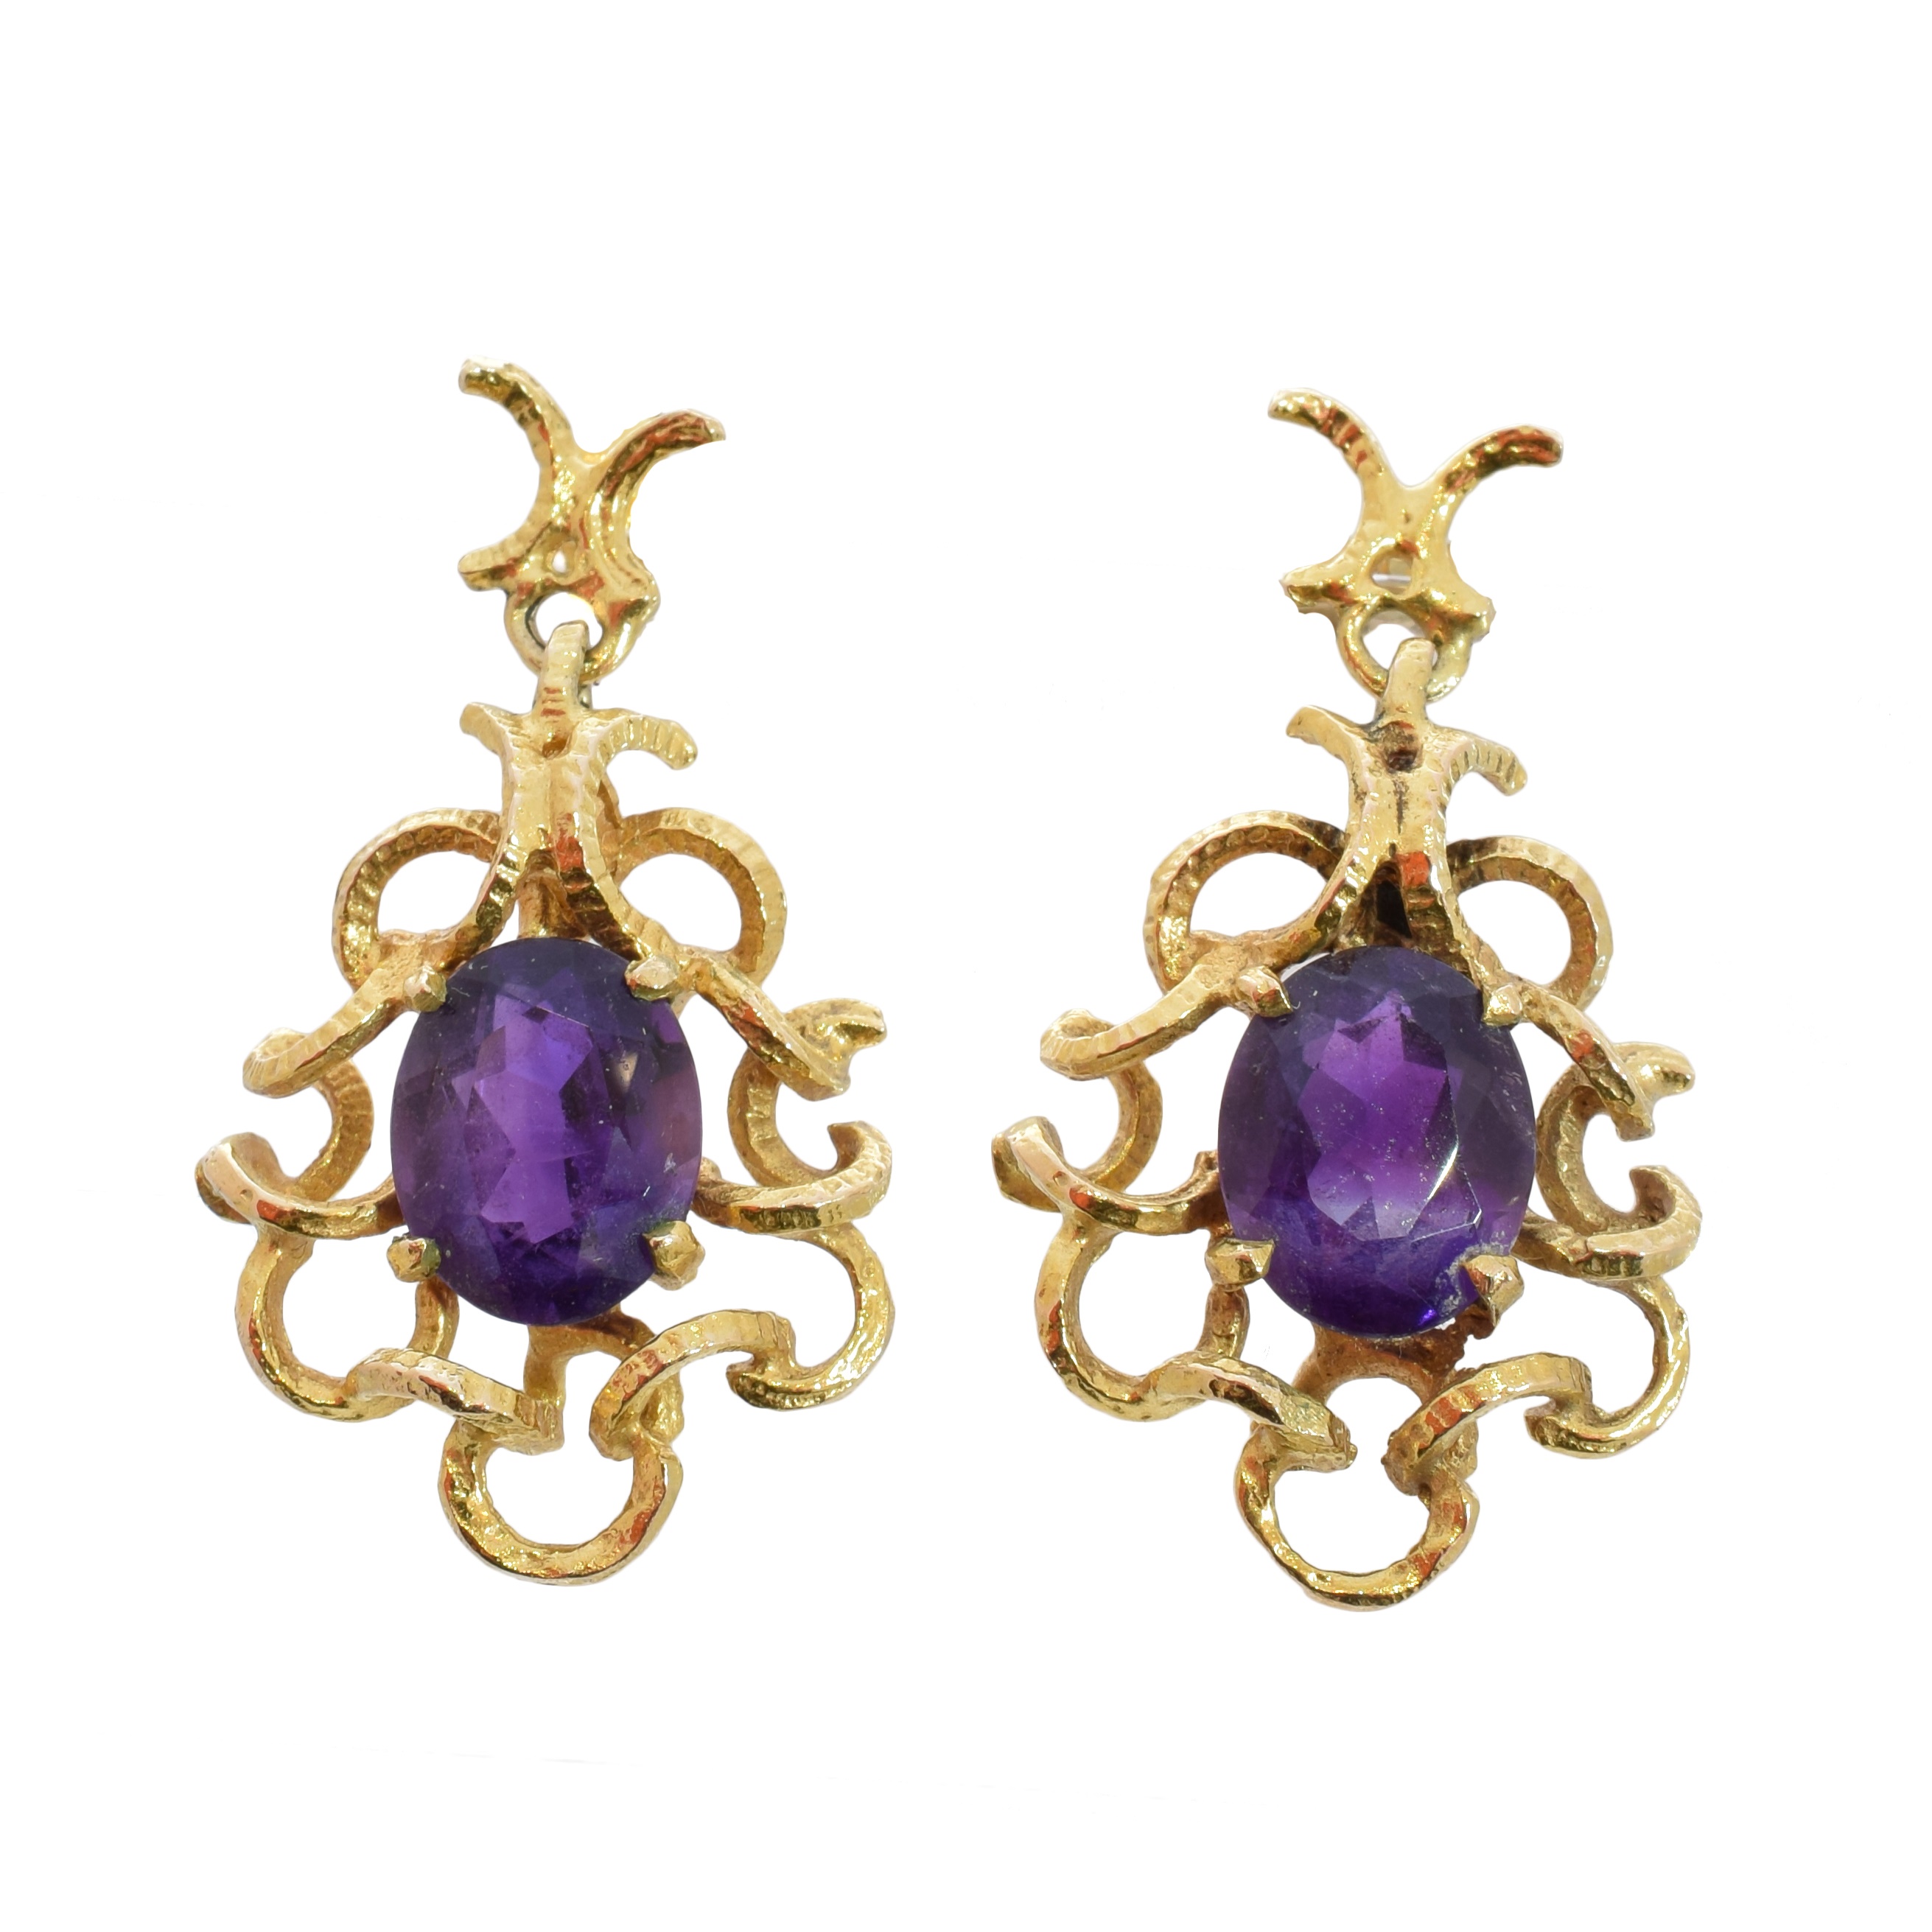 A pair of 9ct gold amethyst earrings by Deakin & Francis